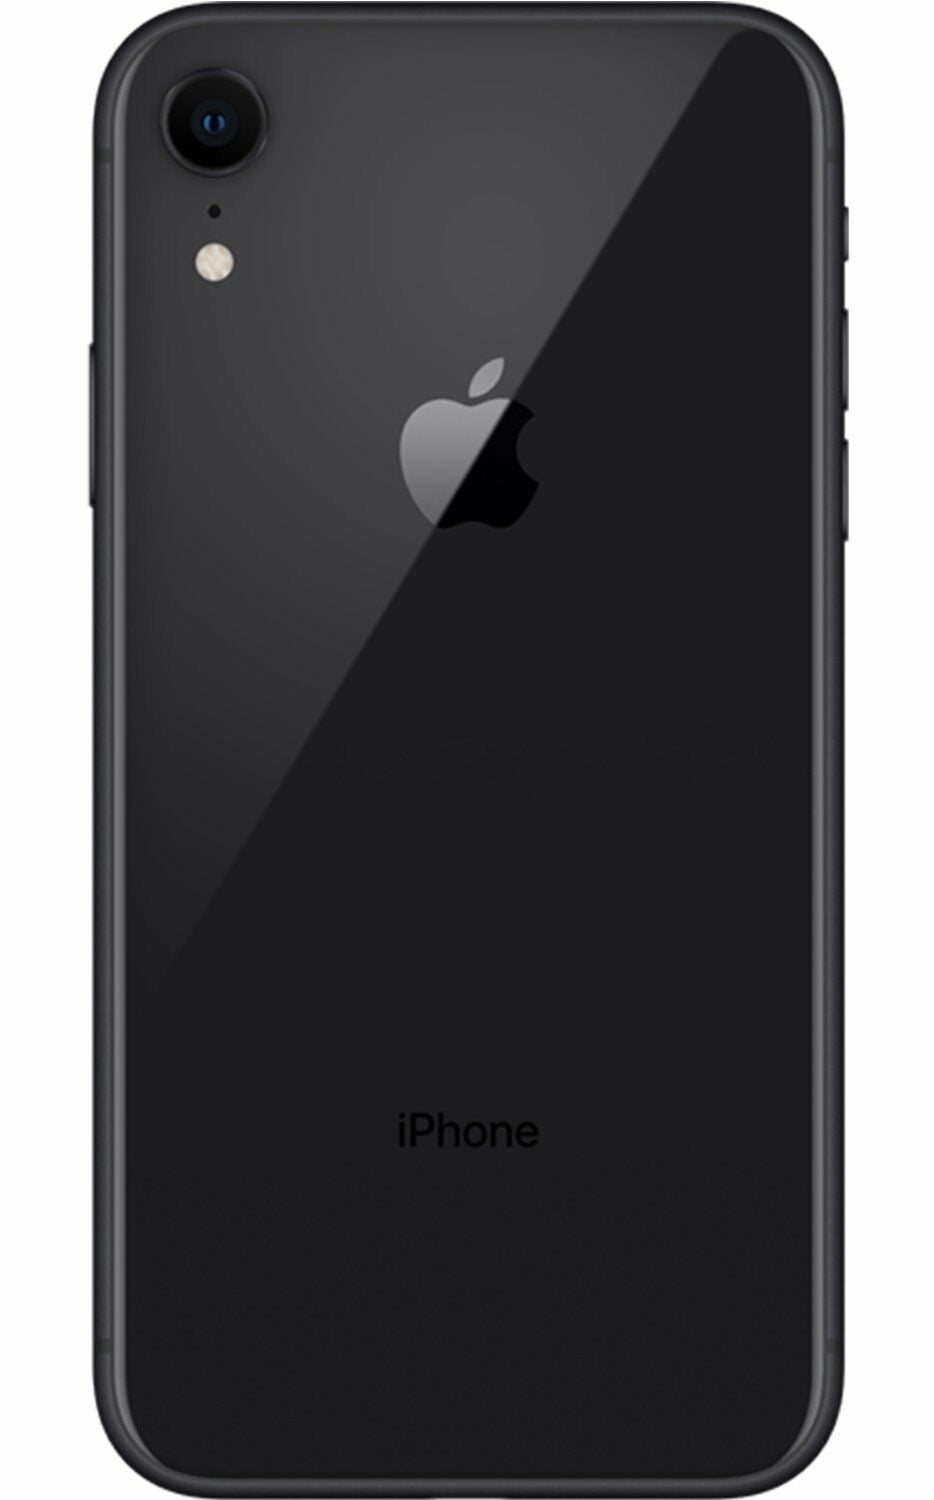 Like New Apple iPhone XR 64GB Factory Unlocked Smartphone 4G LTE iOS  Smartphone